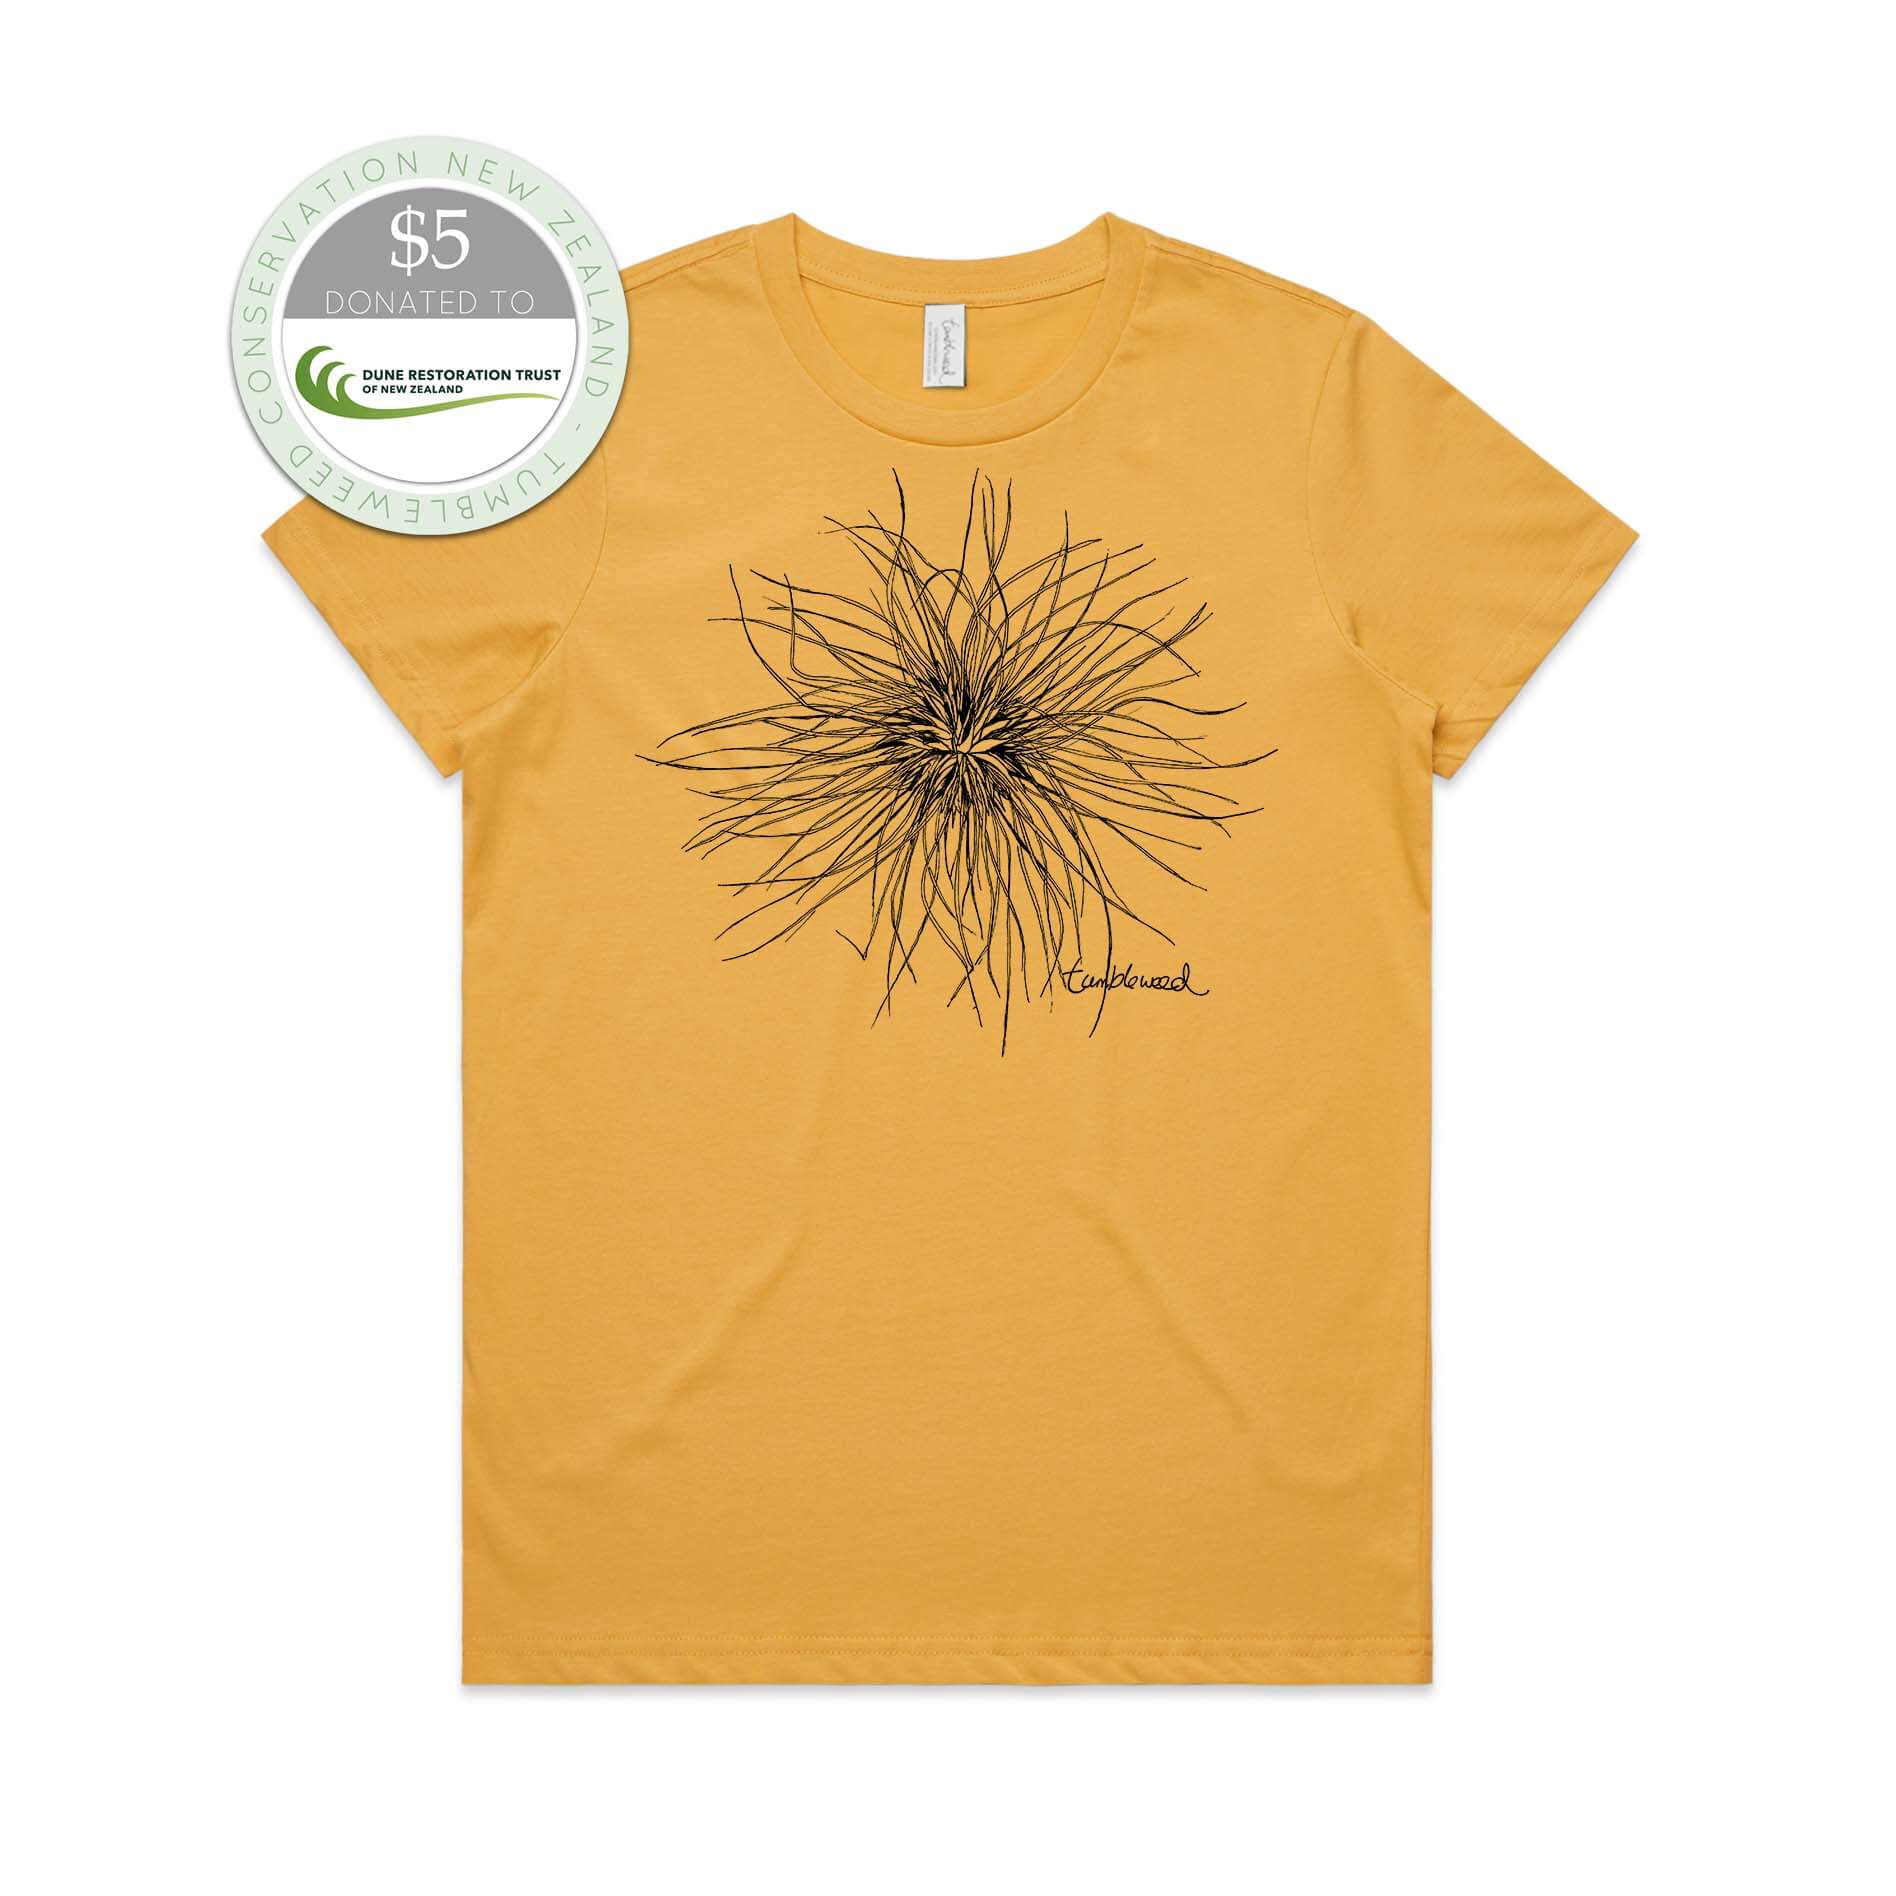 Mustard, female t-shirt featuring a screen printed Tumbleweed design.